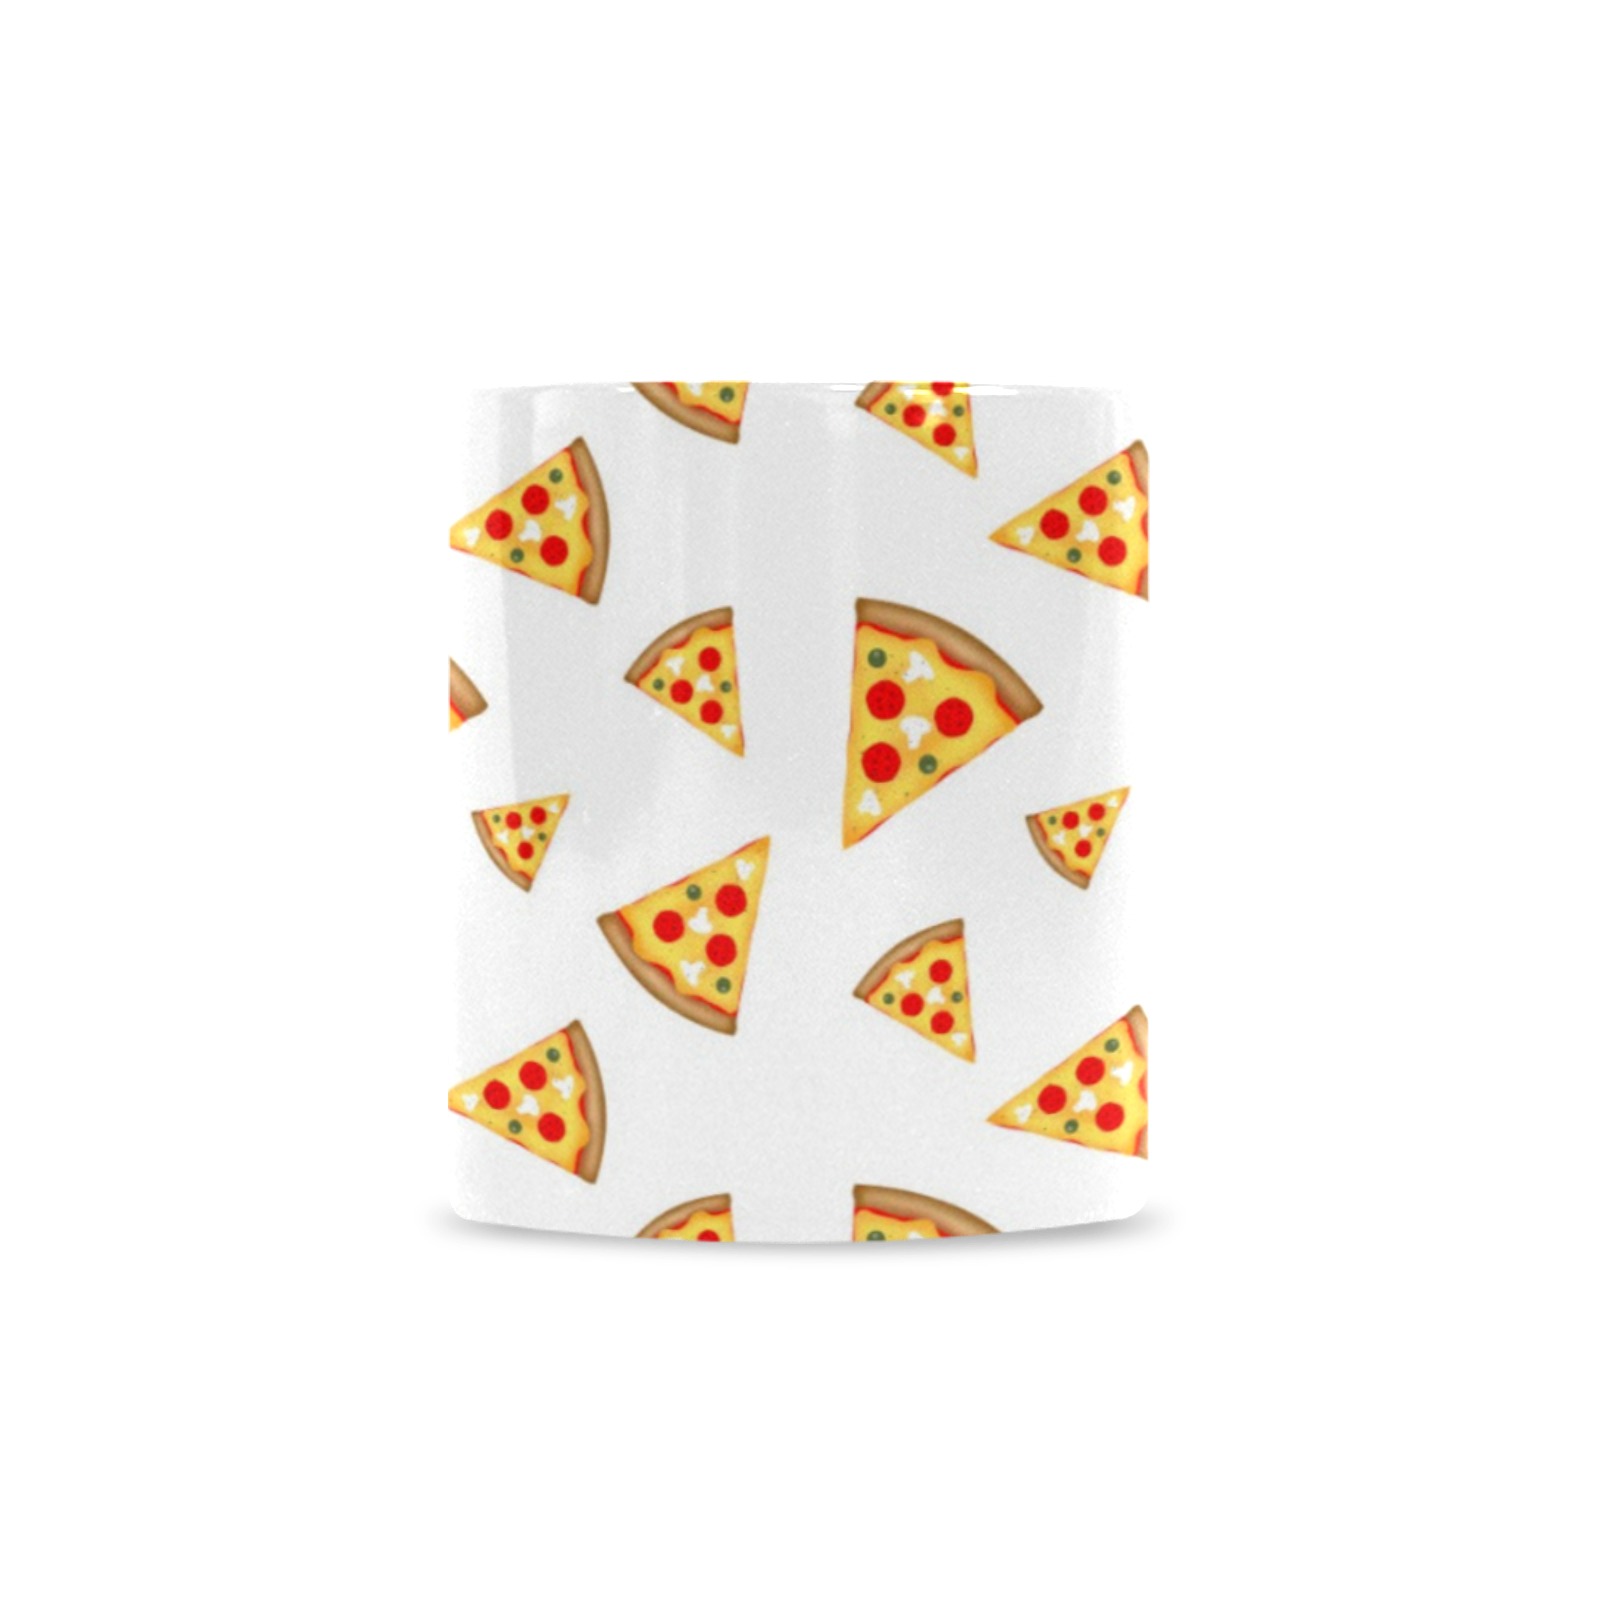 Cool and fun pizza slices pattern on white Custom White Mug (11oz)